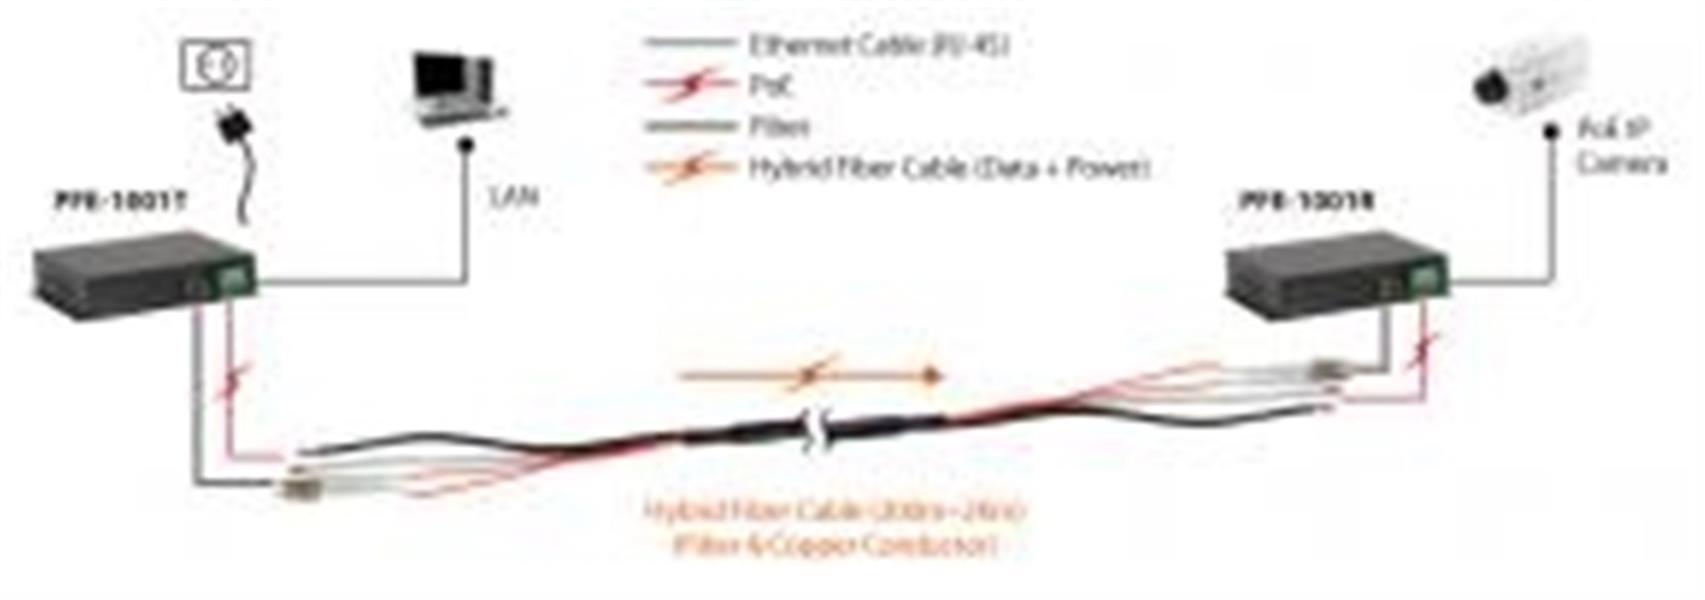 LevelOne PFE-1101T netwerkextender Netwerkzender Zwart